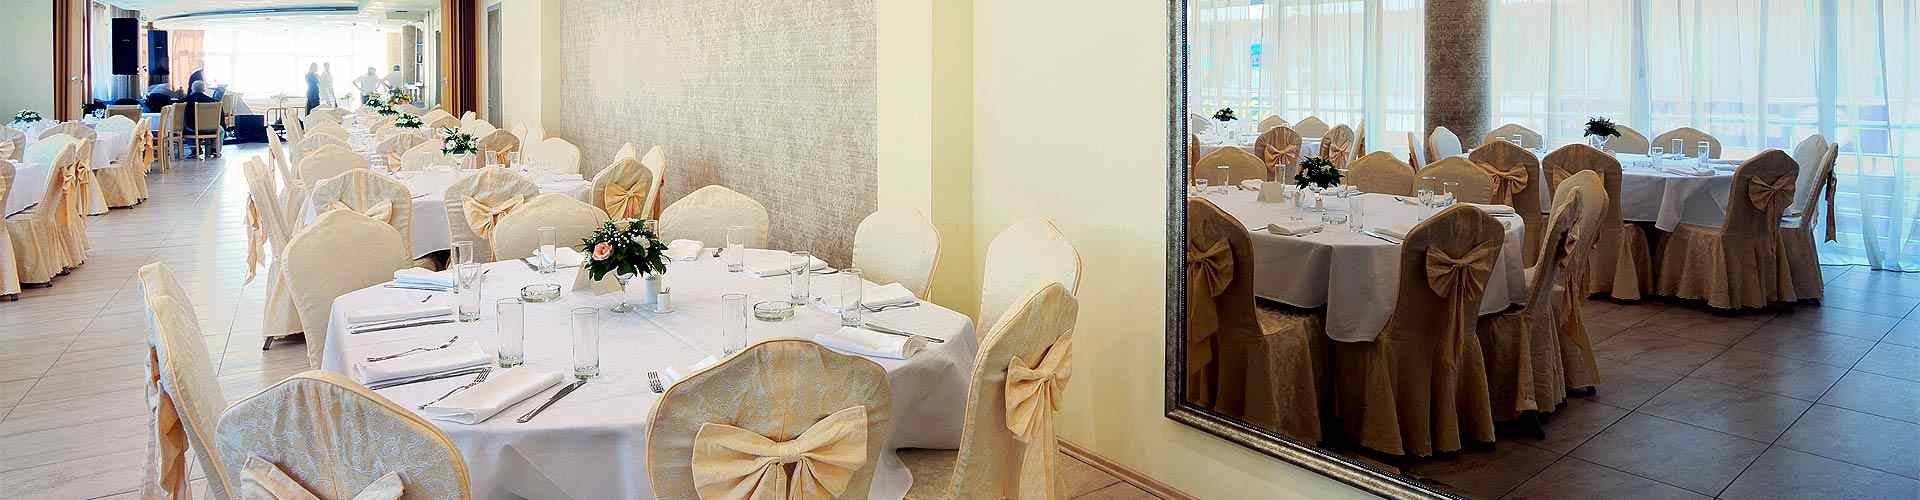 Restaurantes para bodas 2021 en Cueras